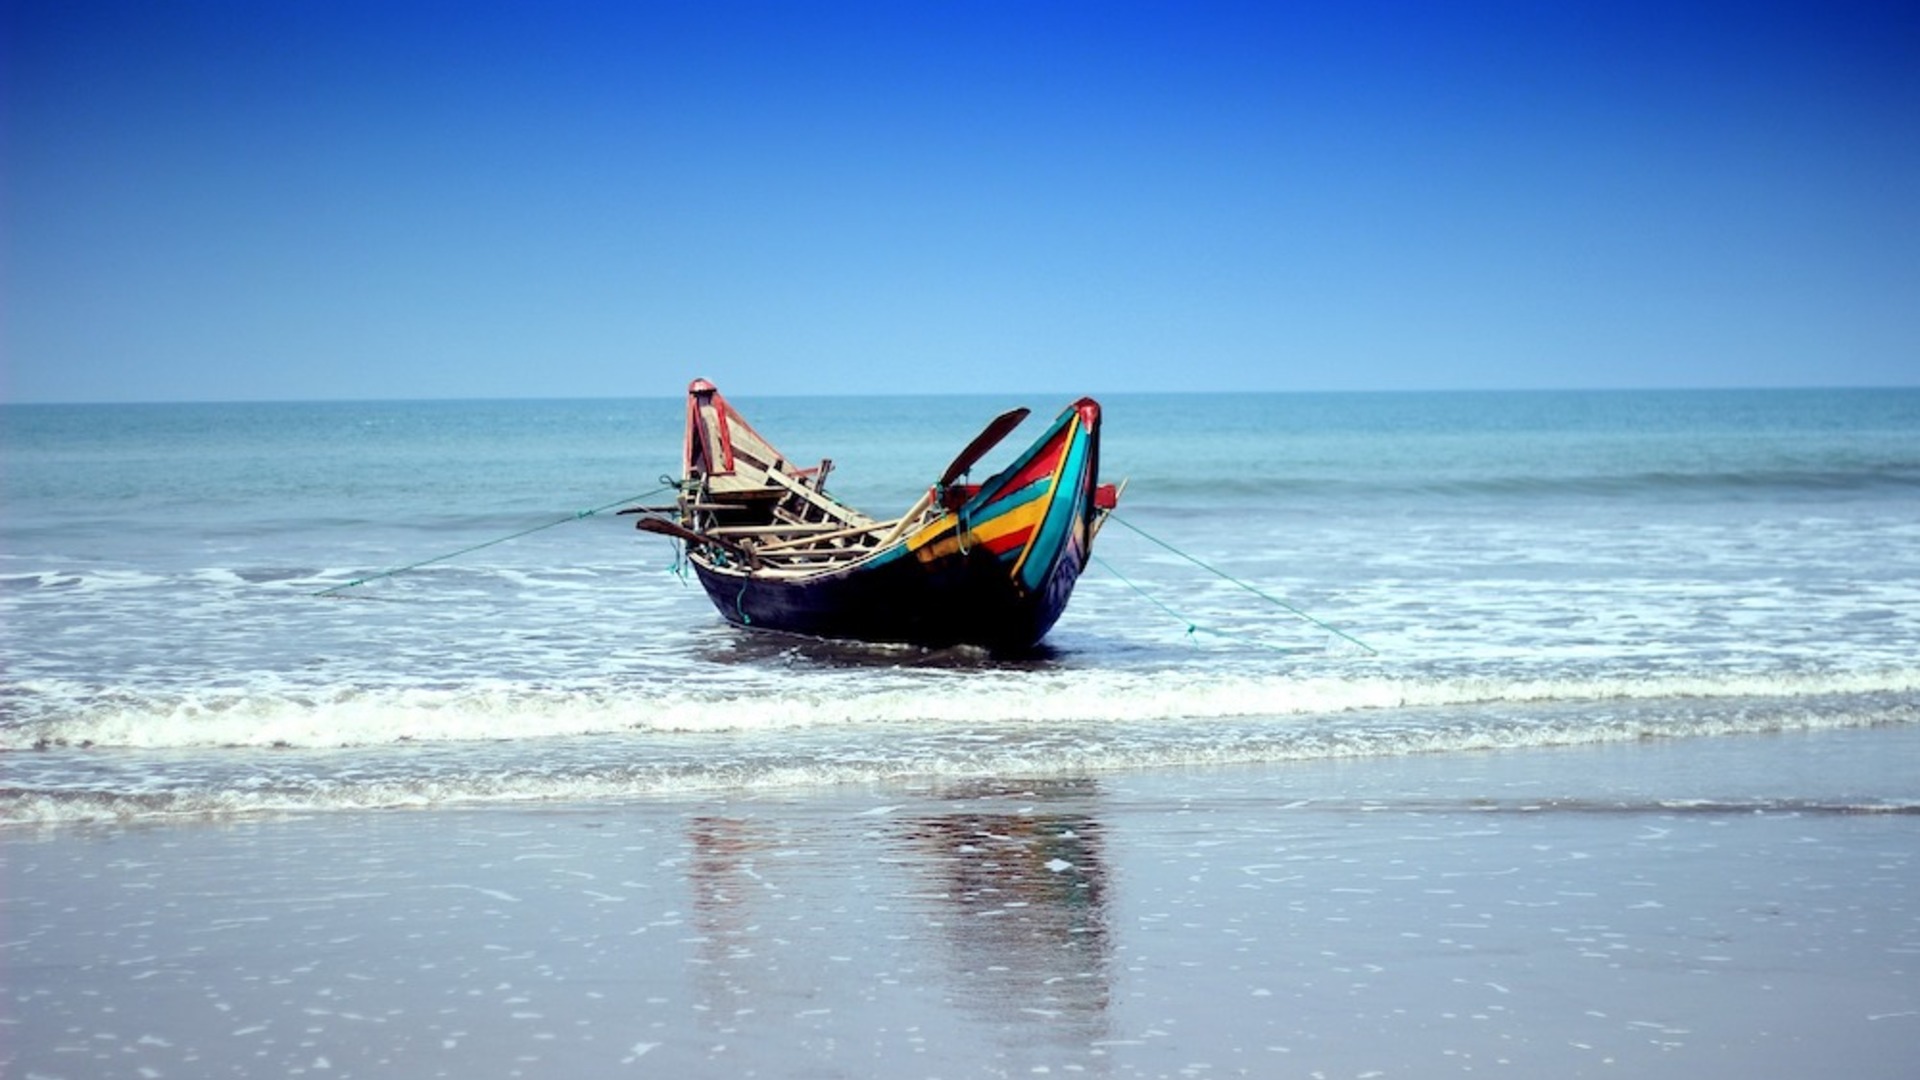 Safeguarding Ocean Resources in Bangladesh